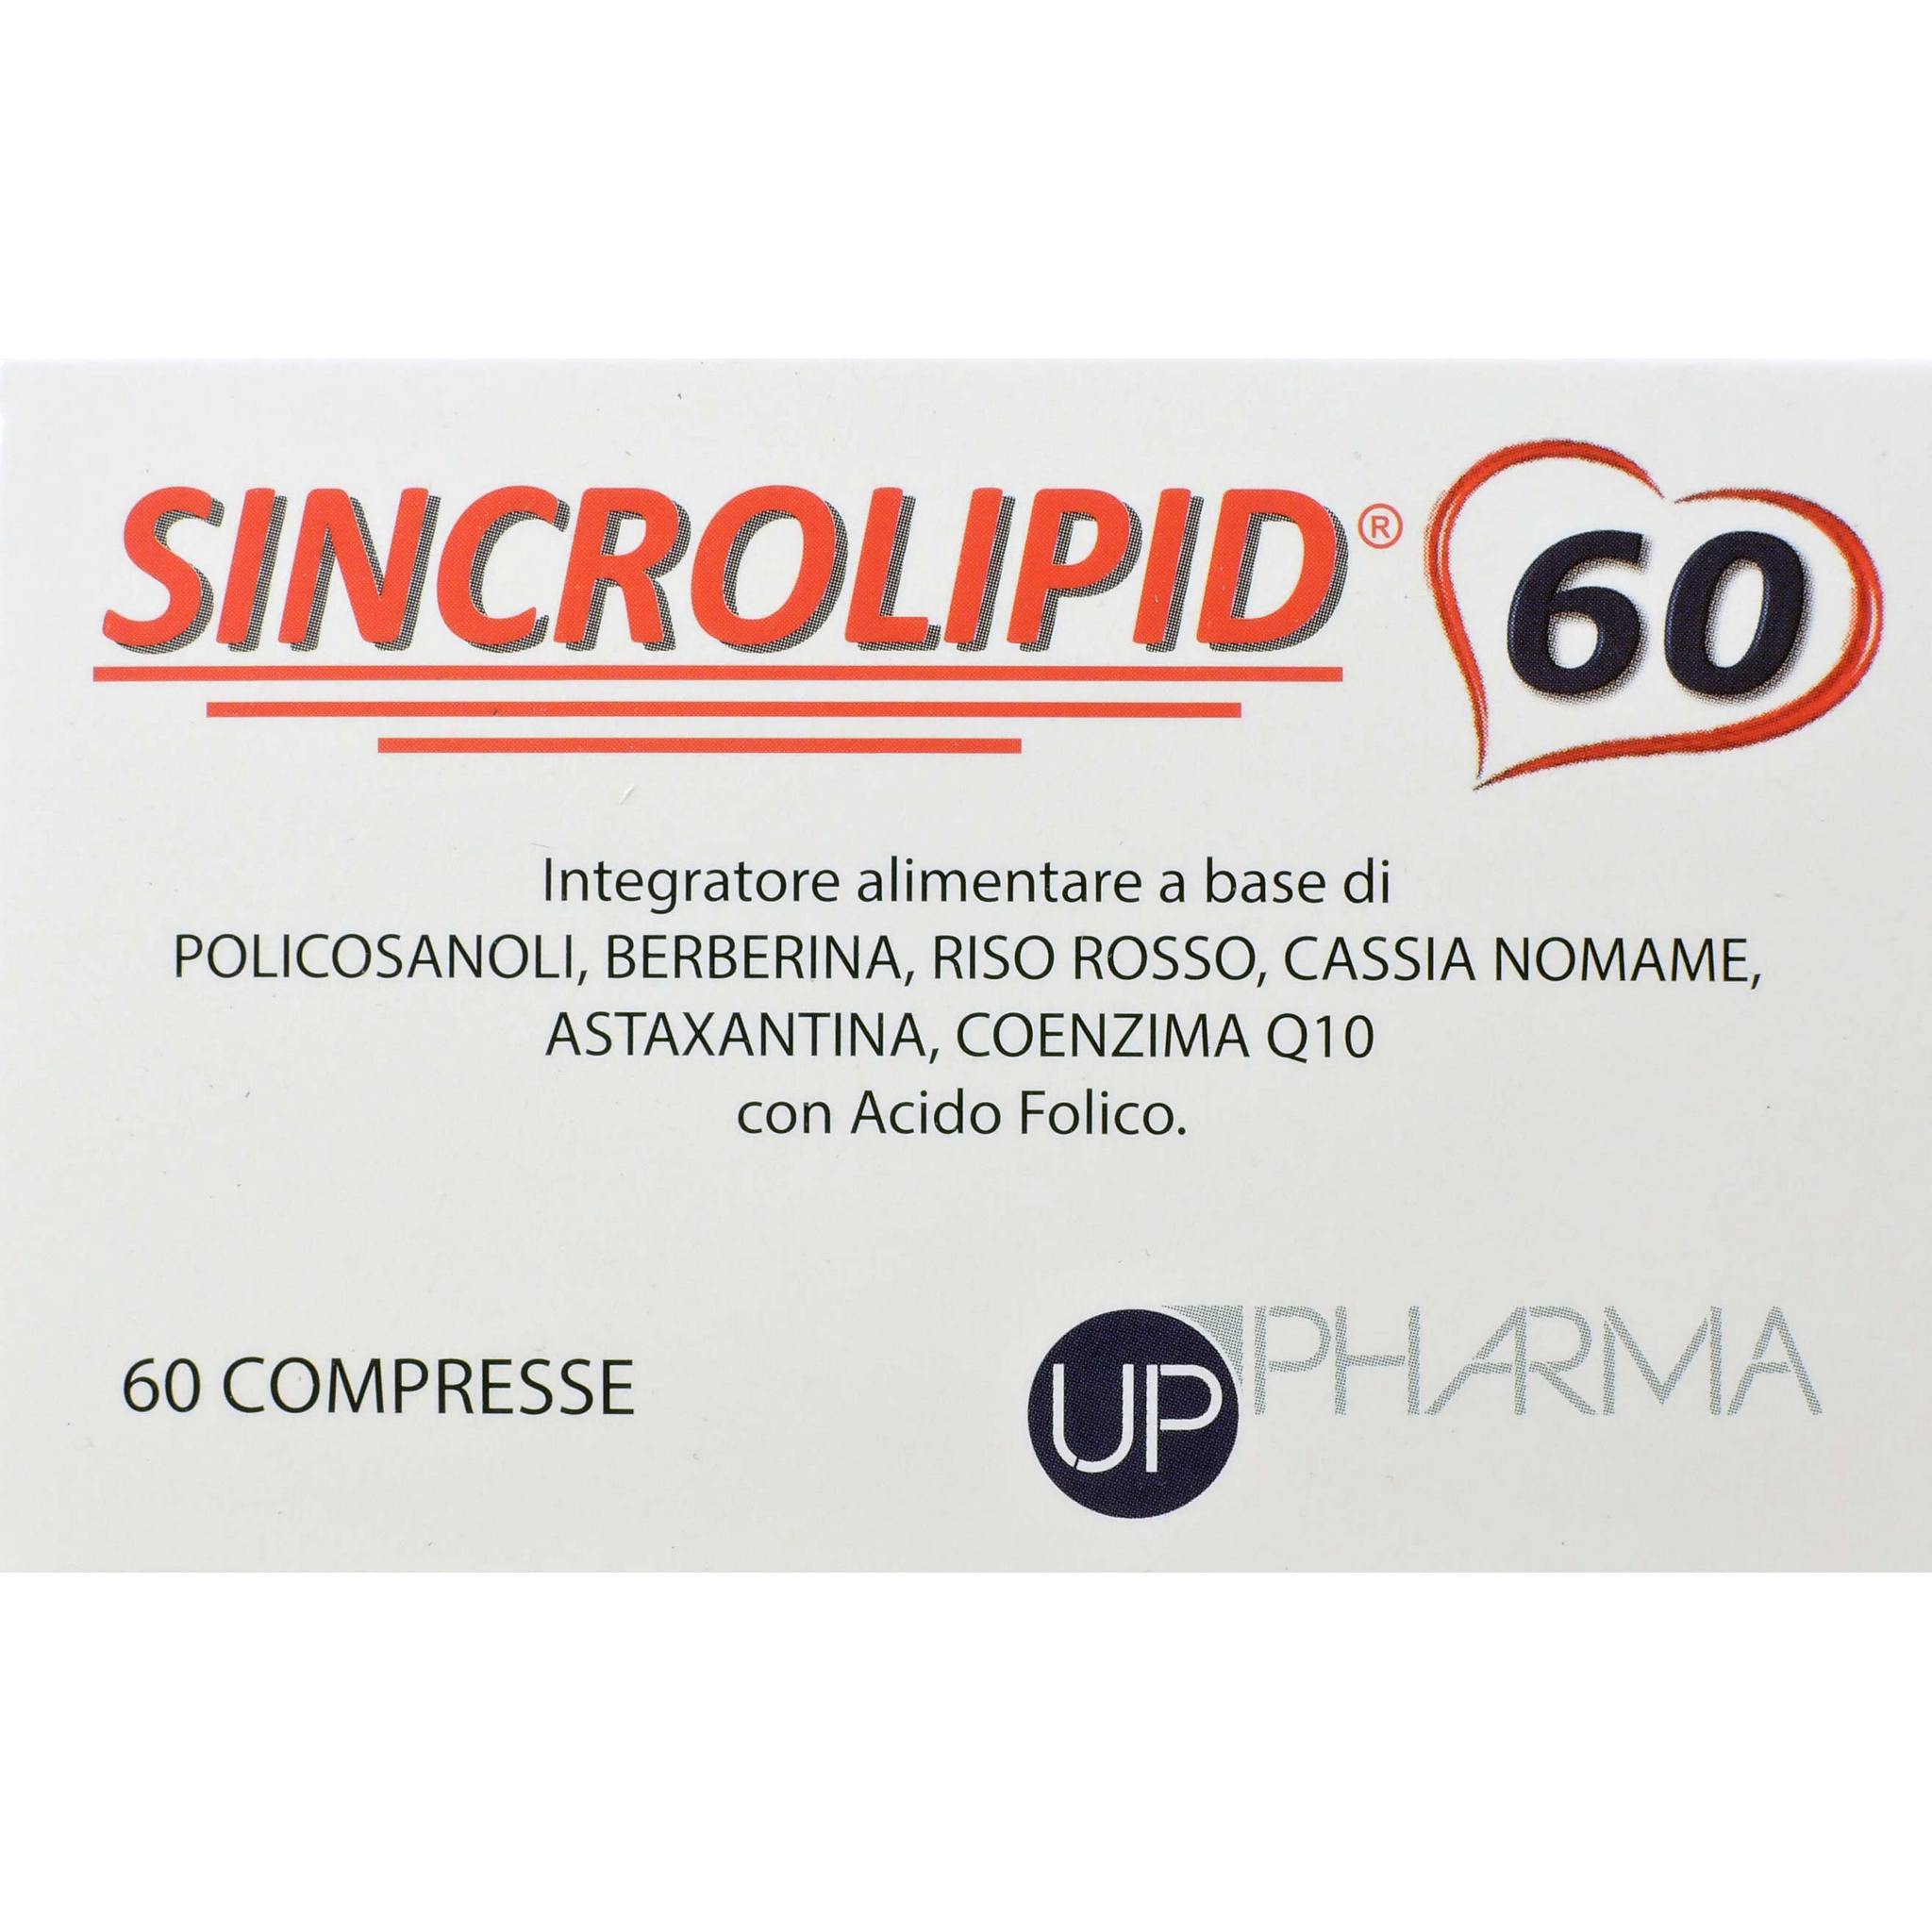 Sincrolipid 60 Compresse